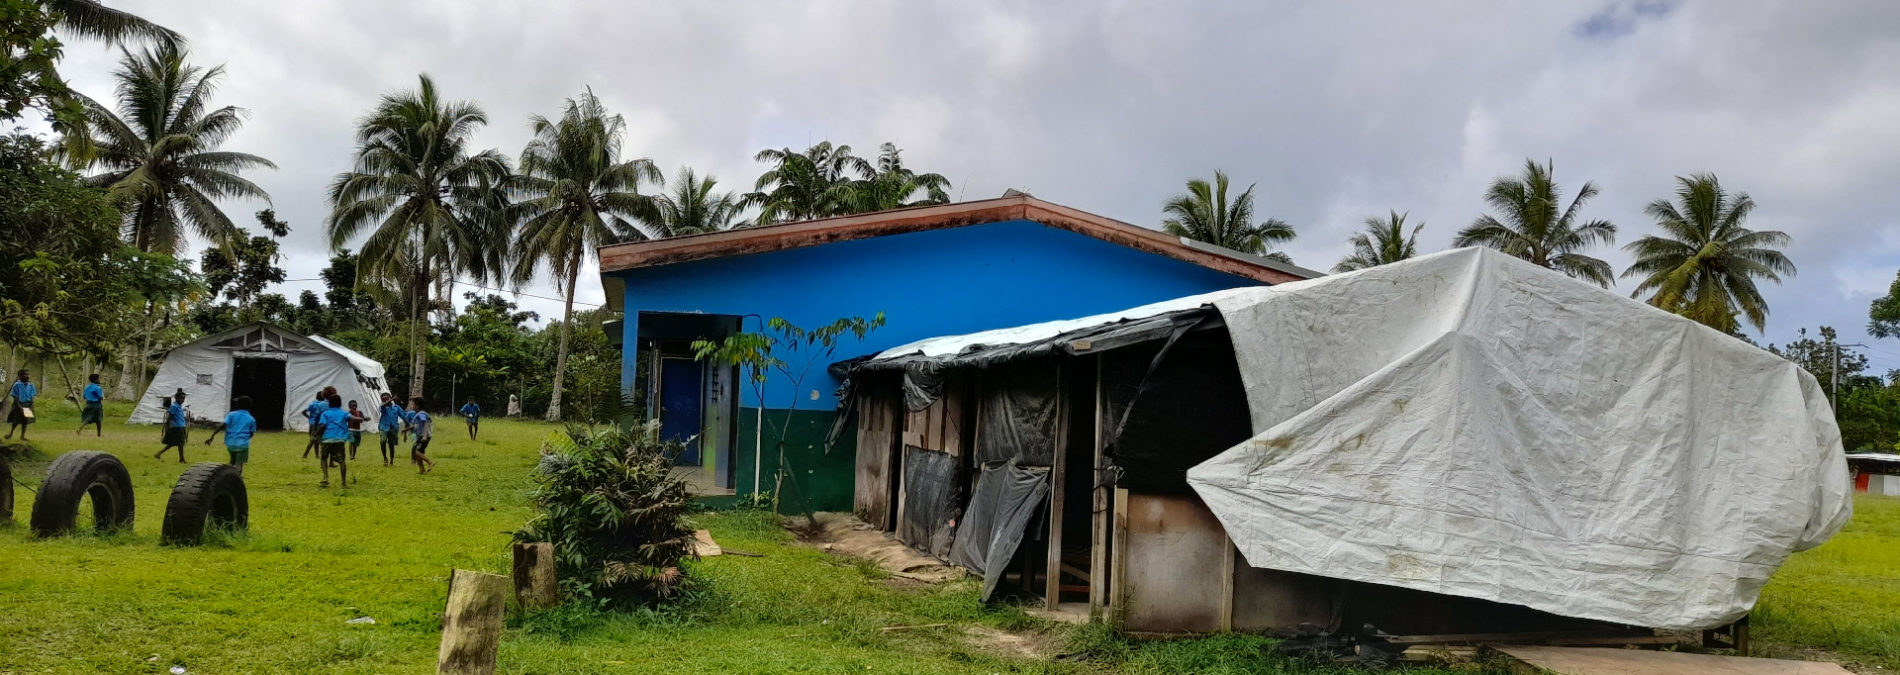 Vanuatu : RECONSTRUIRE APRÈS UN CYCLONE DÉVASTATEUR